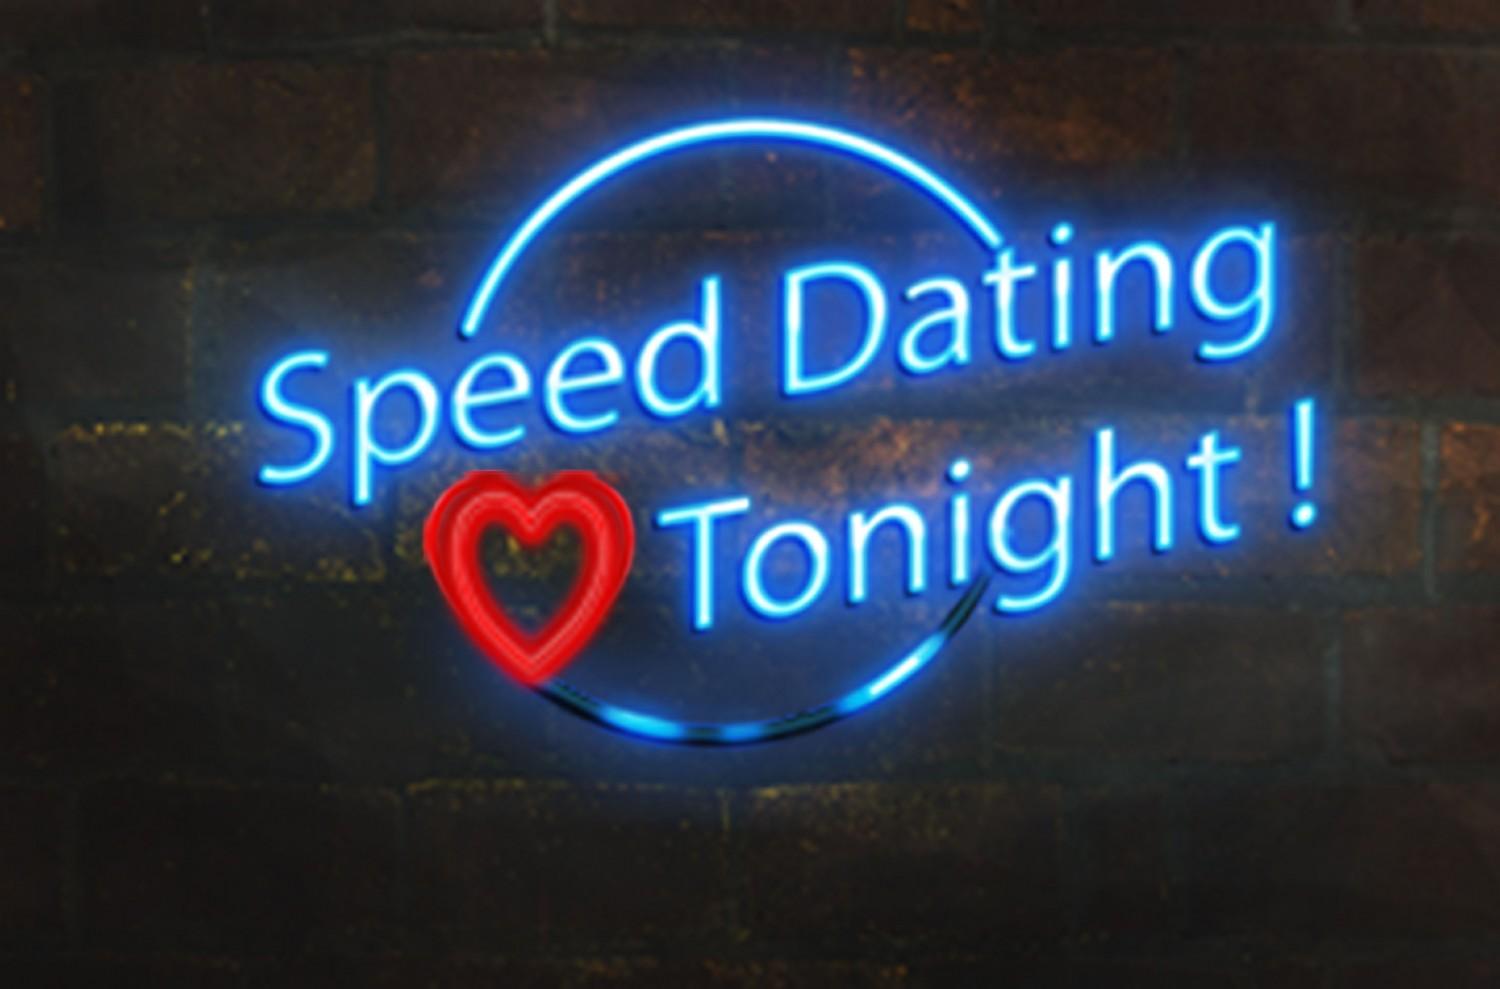 Hand-picked Presents It's Signature Virtual Speed-dating! San Antonio Stuck Home Edition!